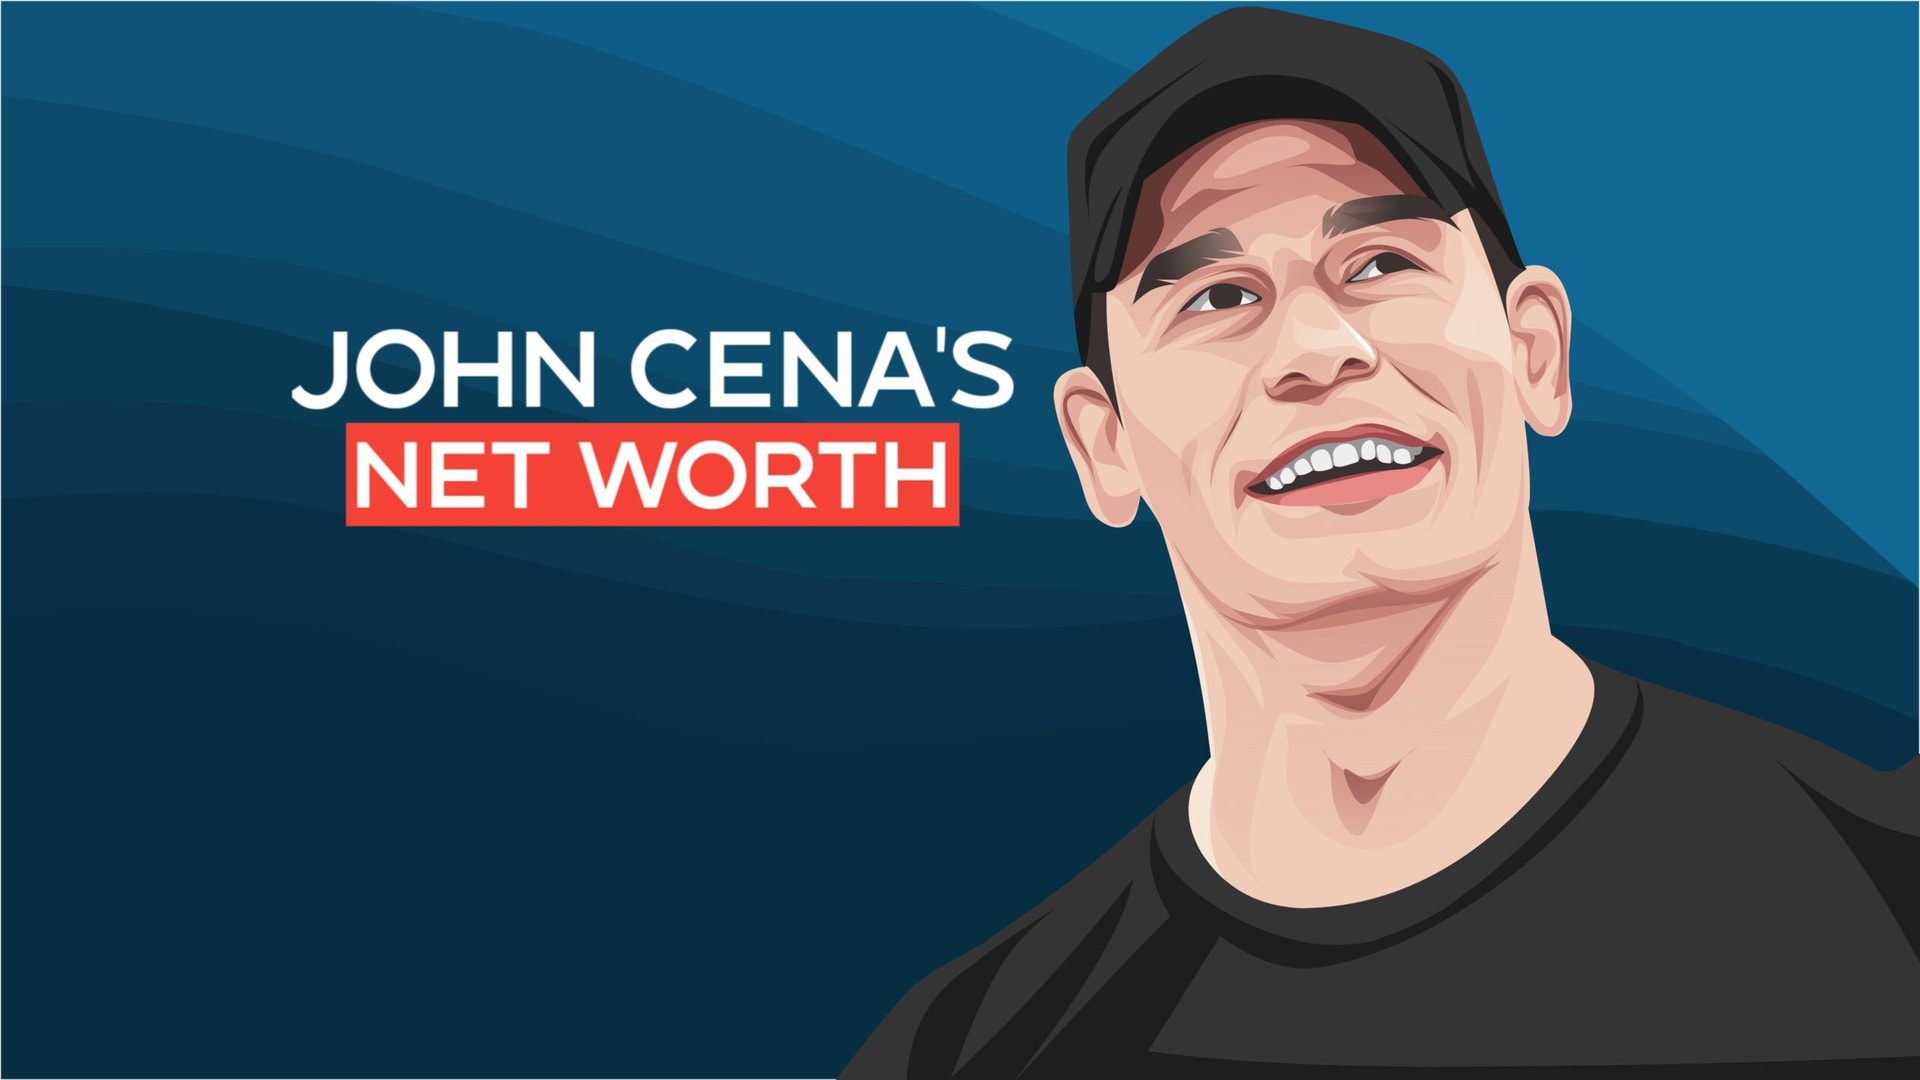 John Cena's Net Worth and Inspiring Story